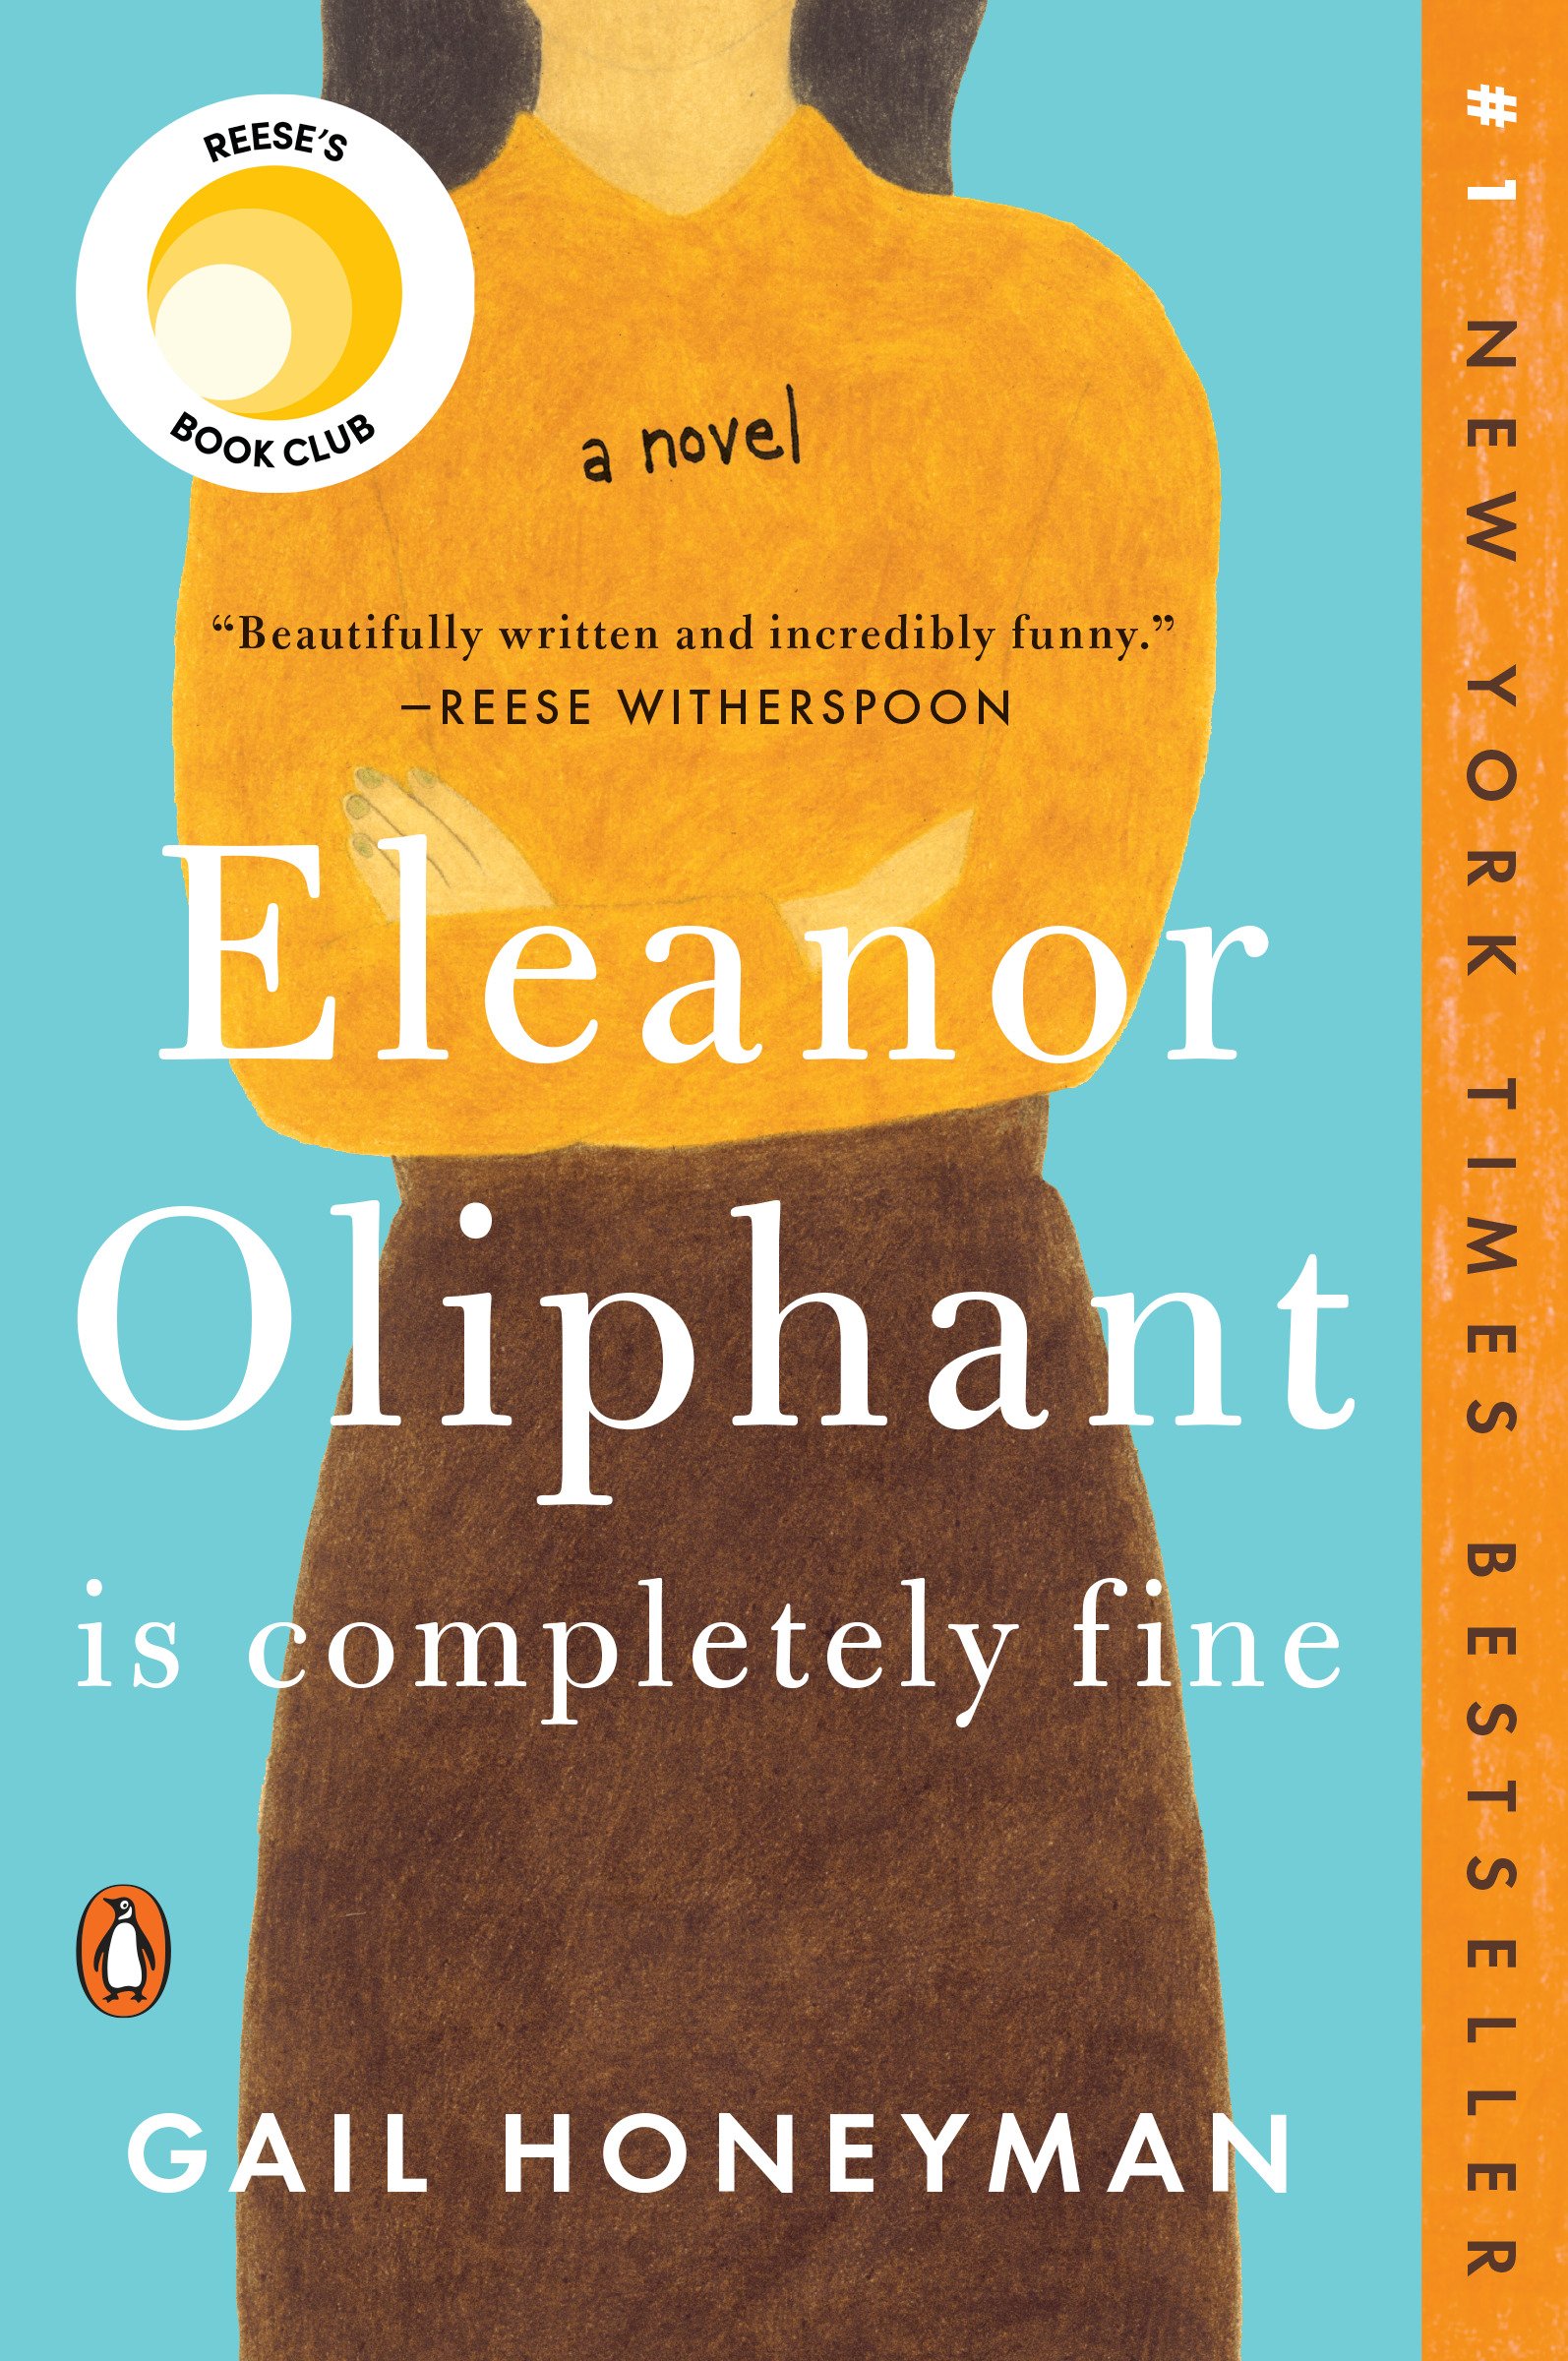 Eleanor Oliphant Is Completely Fine: A Novel (eBook) by Gail Honeyman $1.99